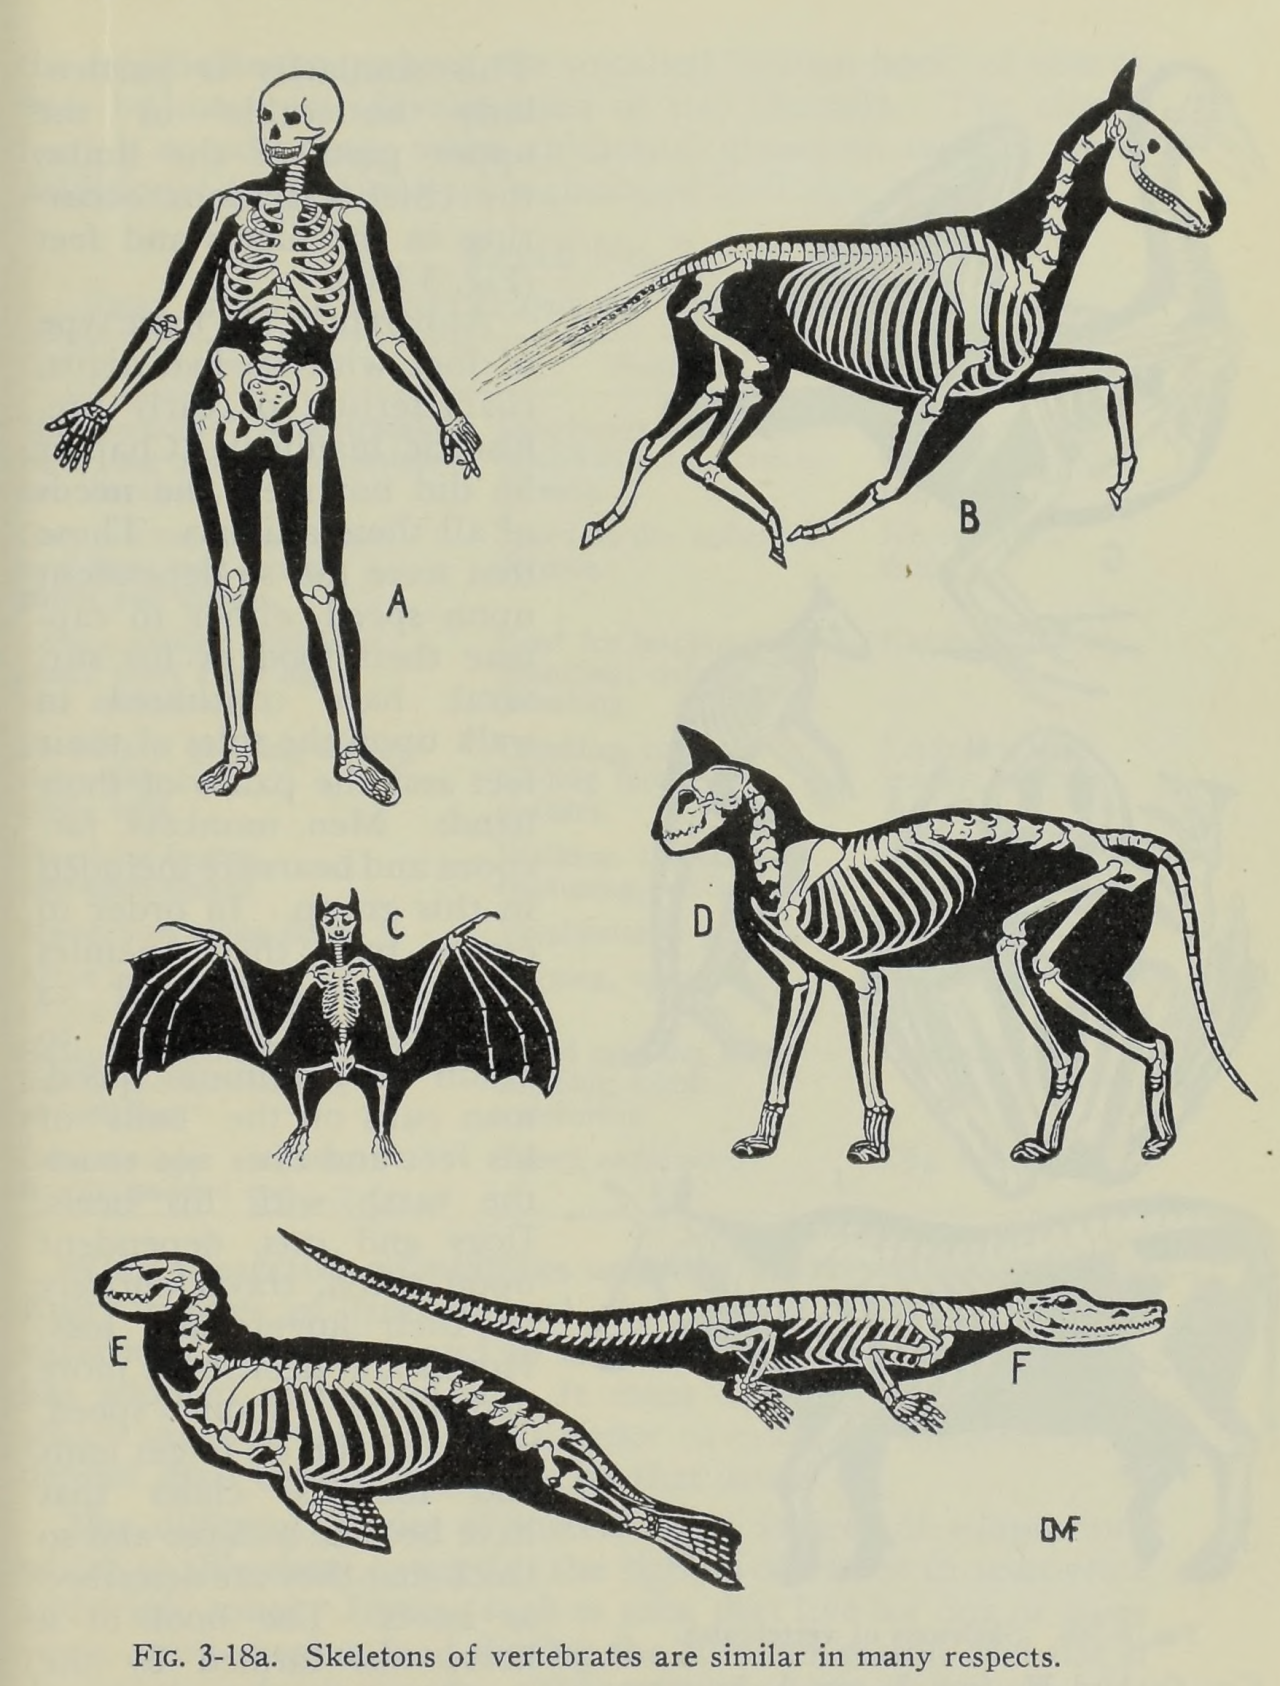 nemfrog — “Skeletons of vertebrates are similar in many...